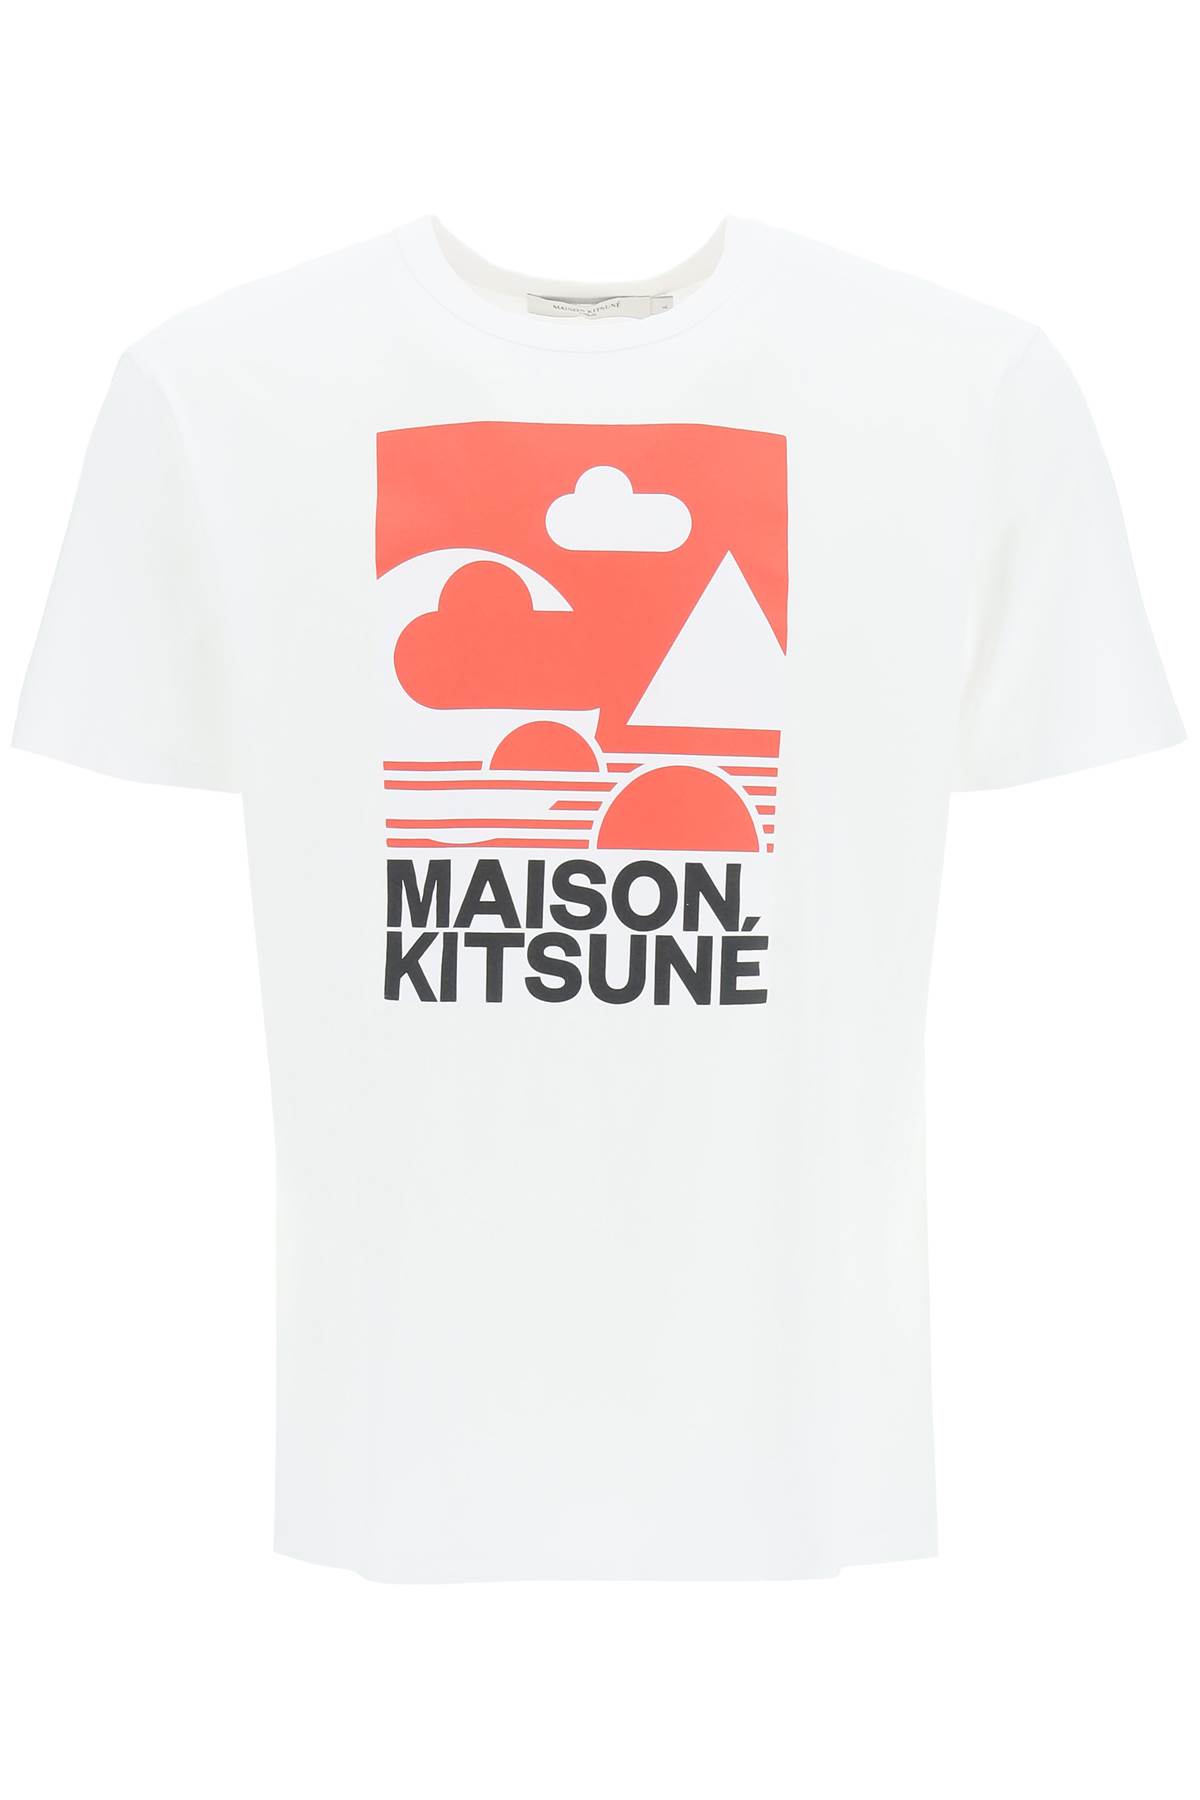 Maison Kitsuné Red Edition Anthony Burrill T-shirt